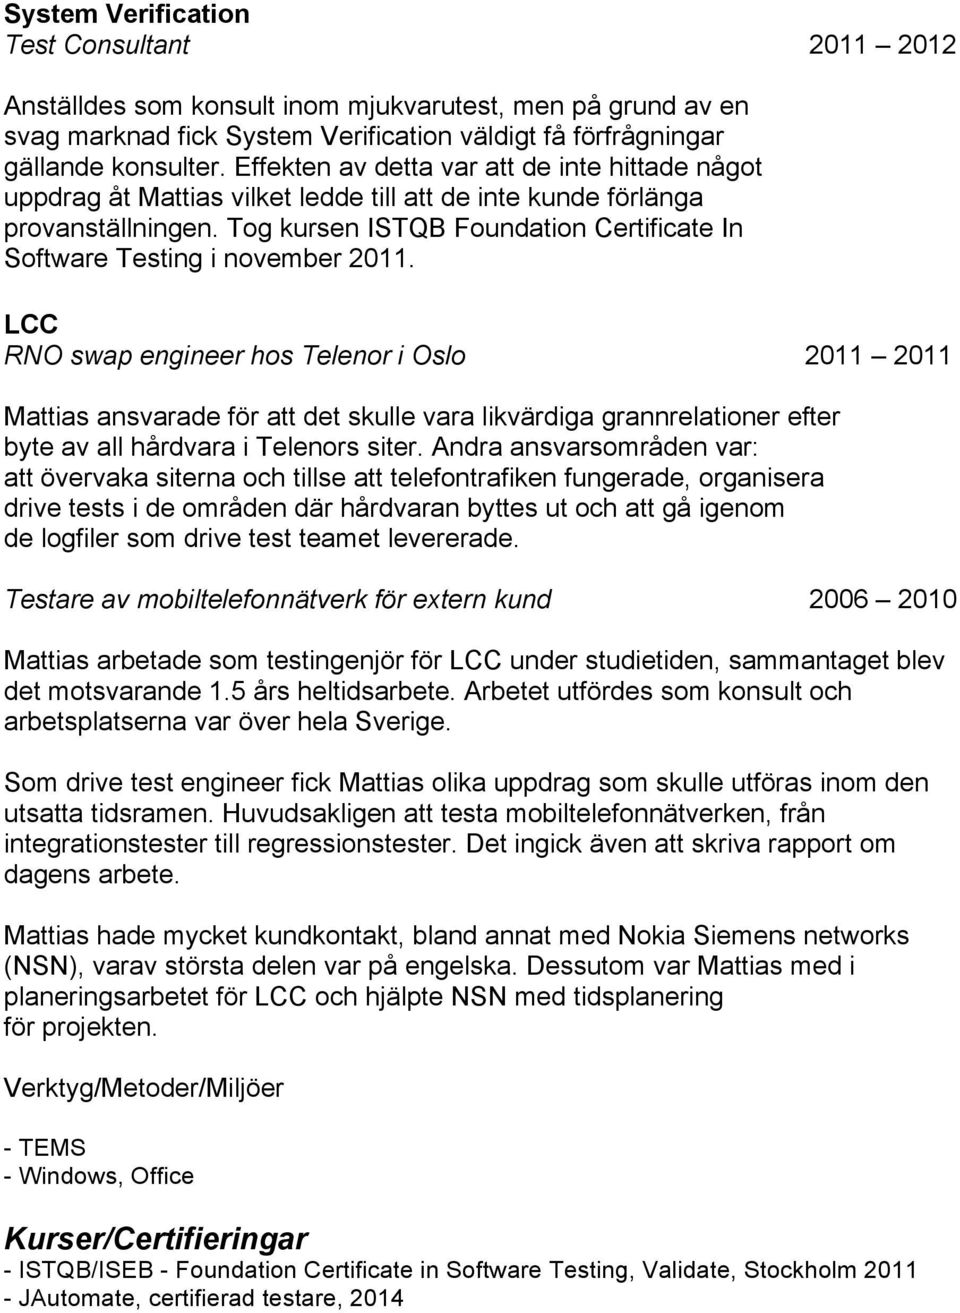 Tog kursen ISTQB Foundation Certificate In Software Testing i november 2011.